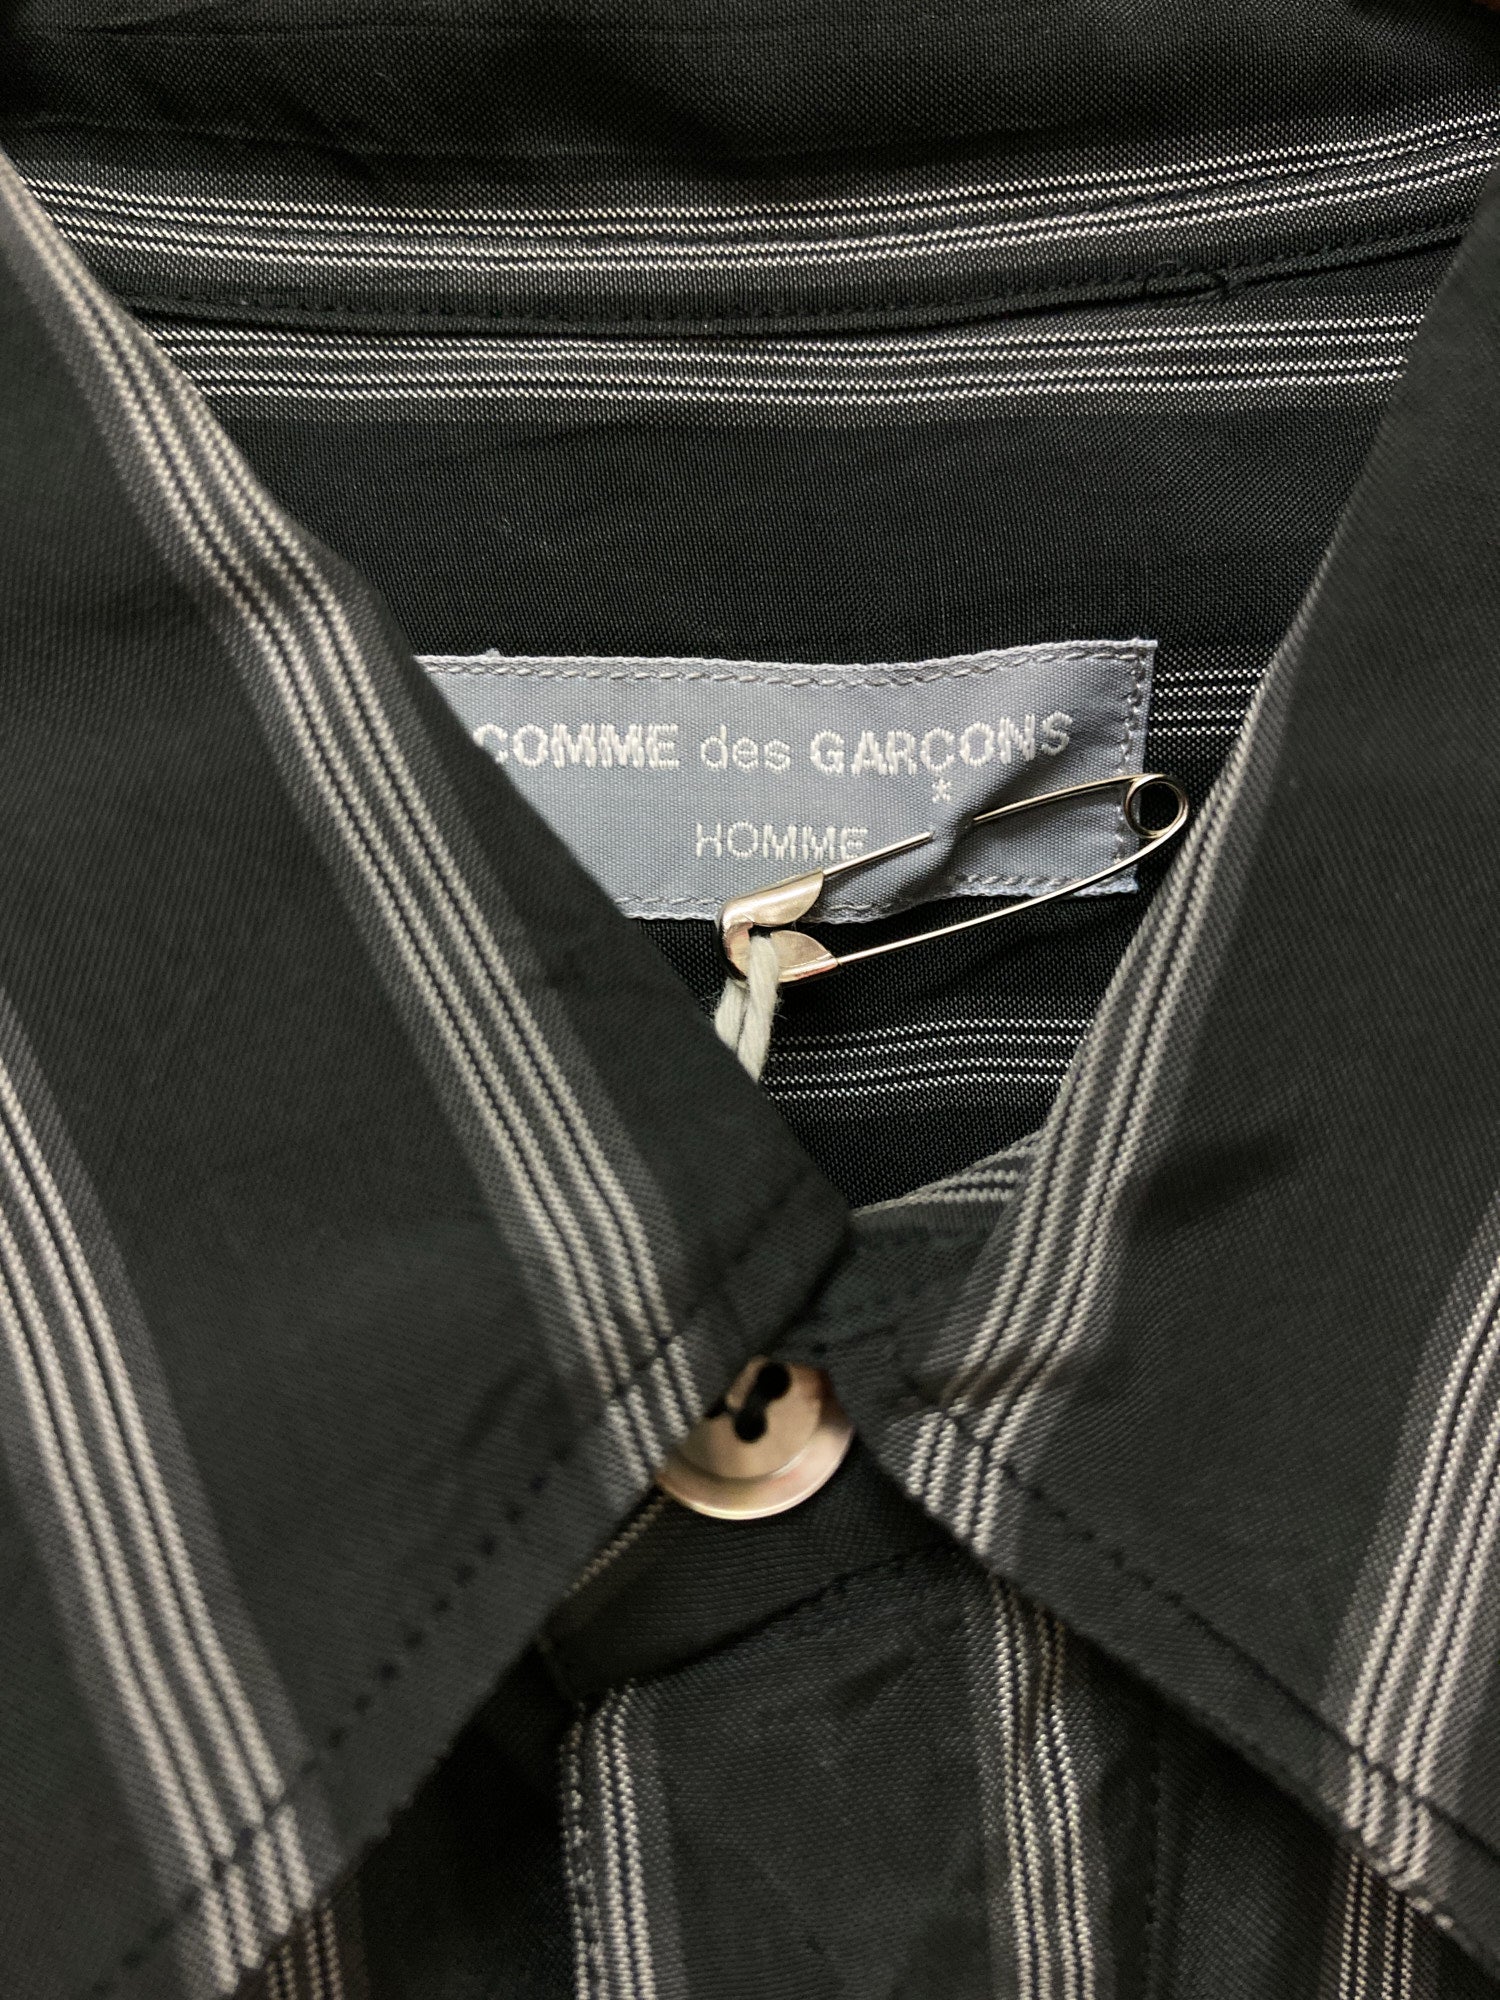 Comme des Garcons Homme 1980s black rayon striped long sleeve shirt - size M L